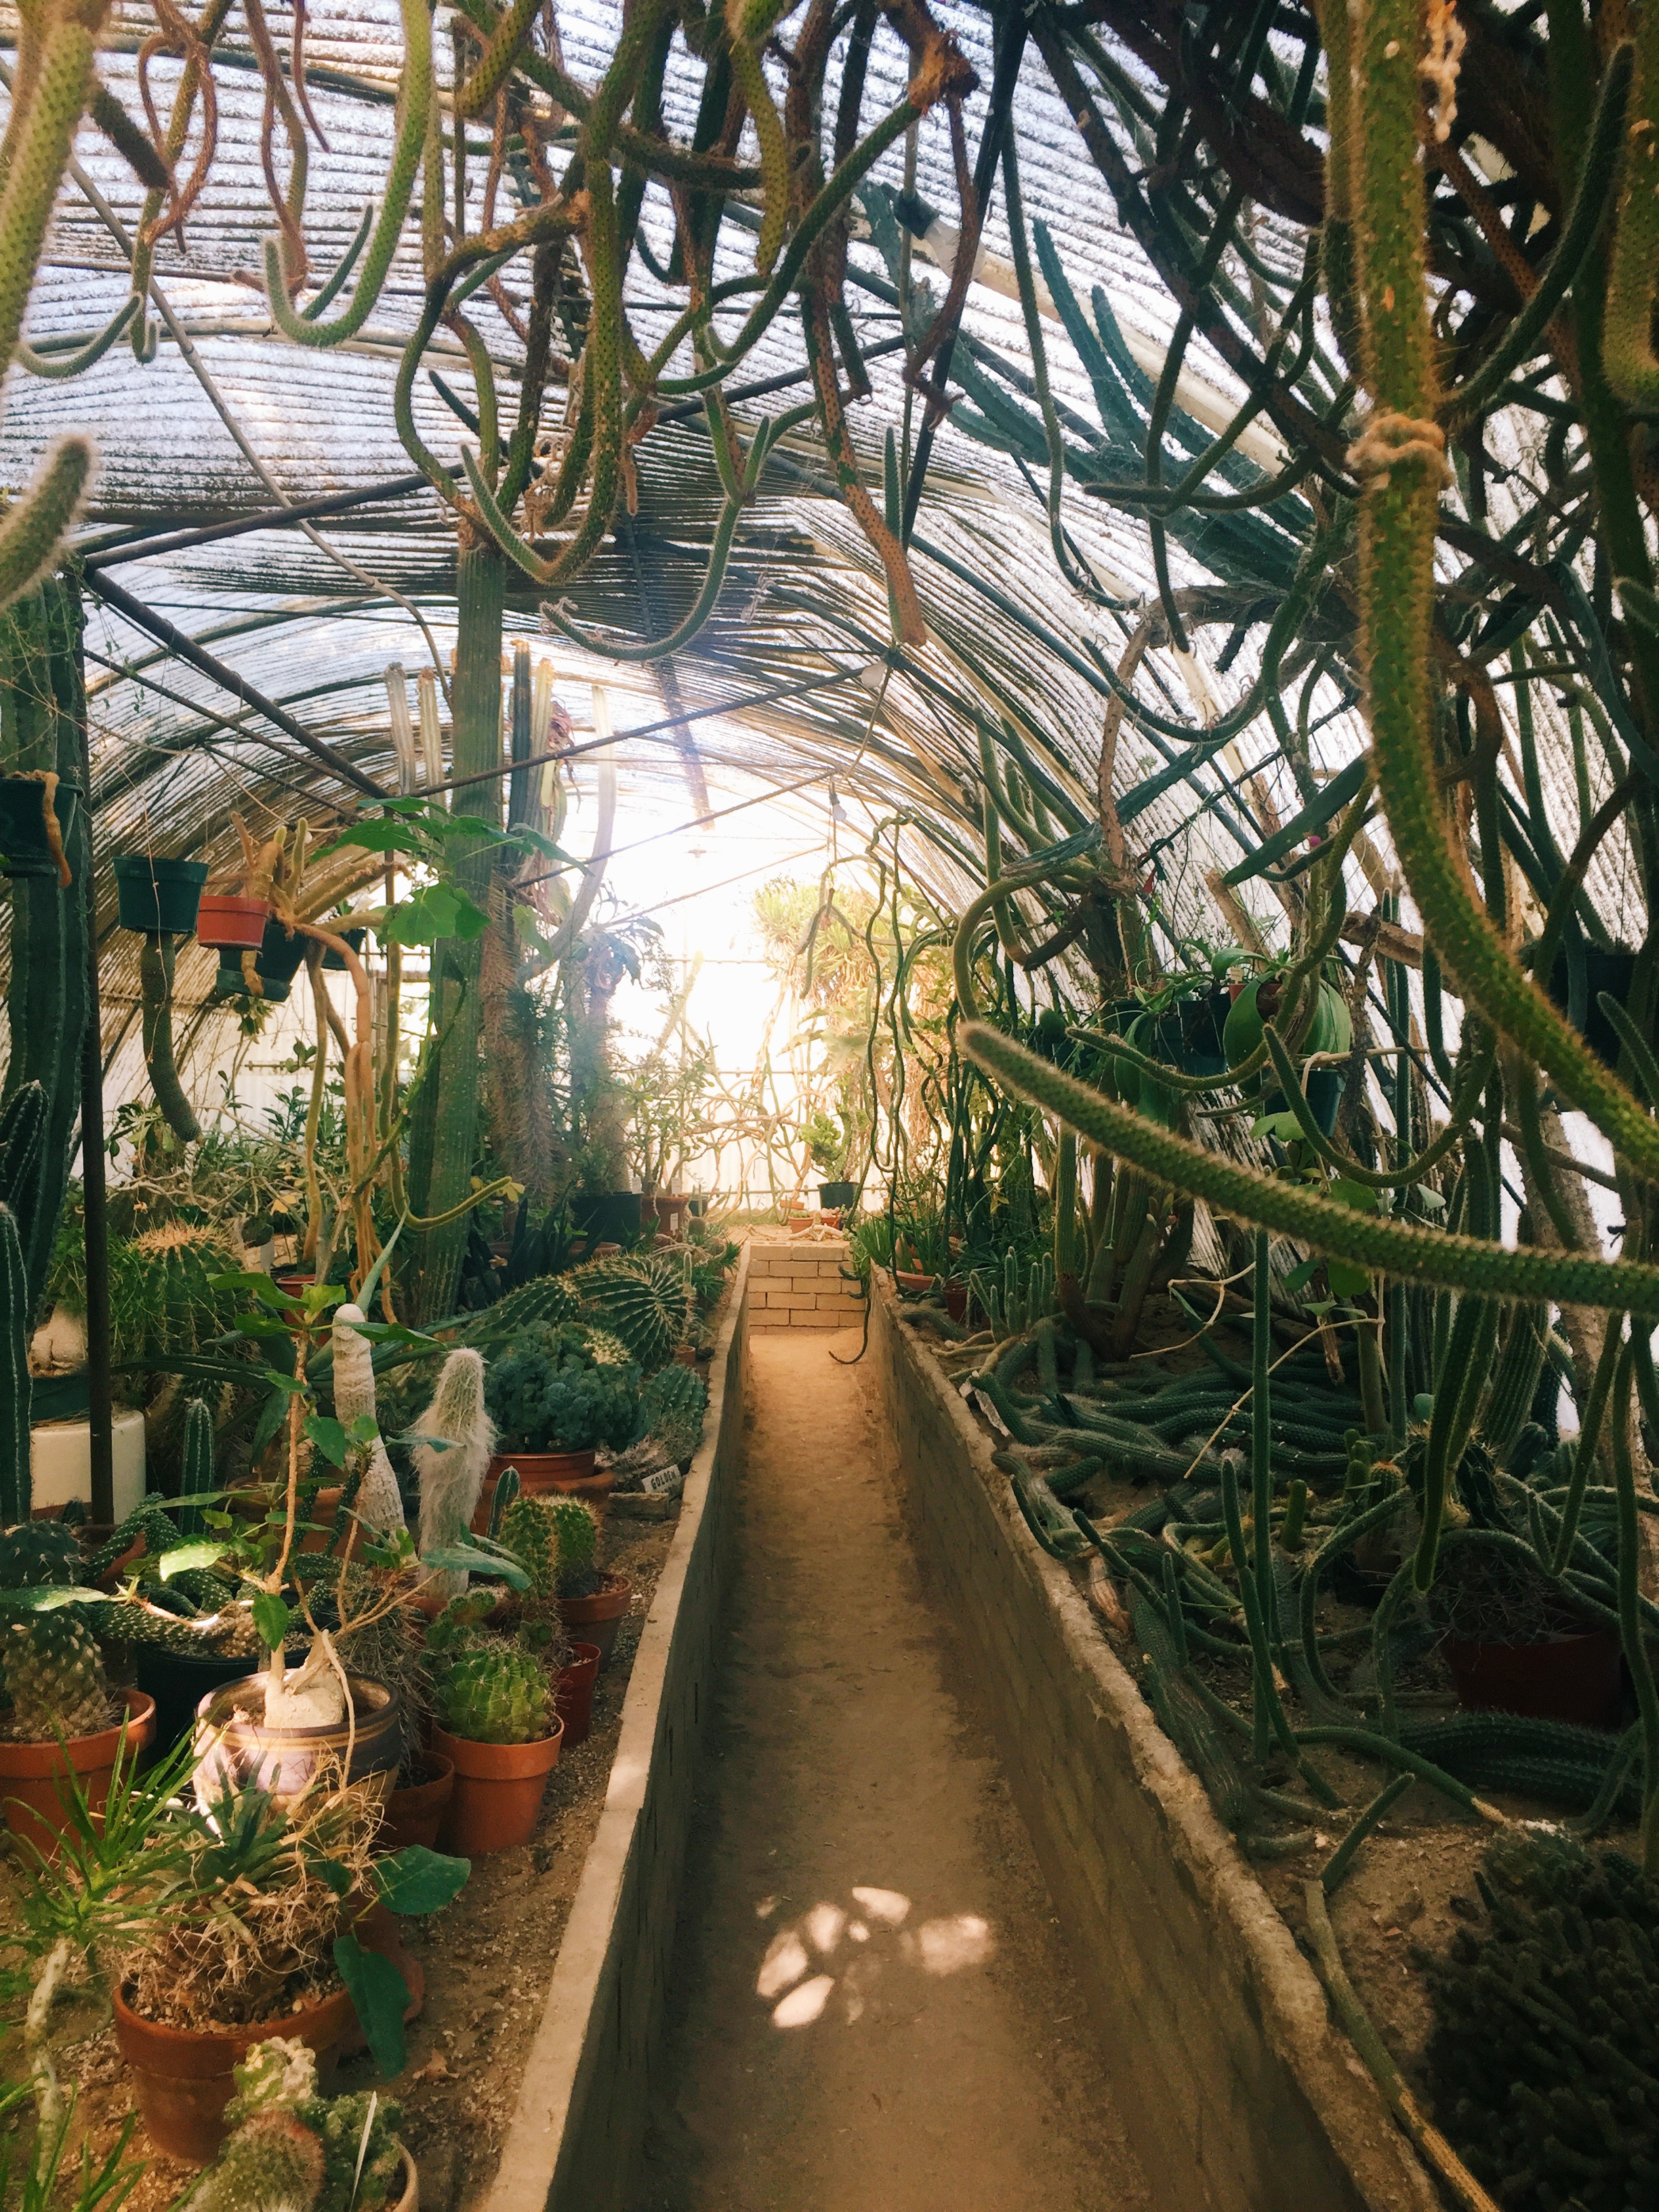  Inside the greenhouse / Moorten Botanical Garden, Palm Springs CA 